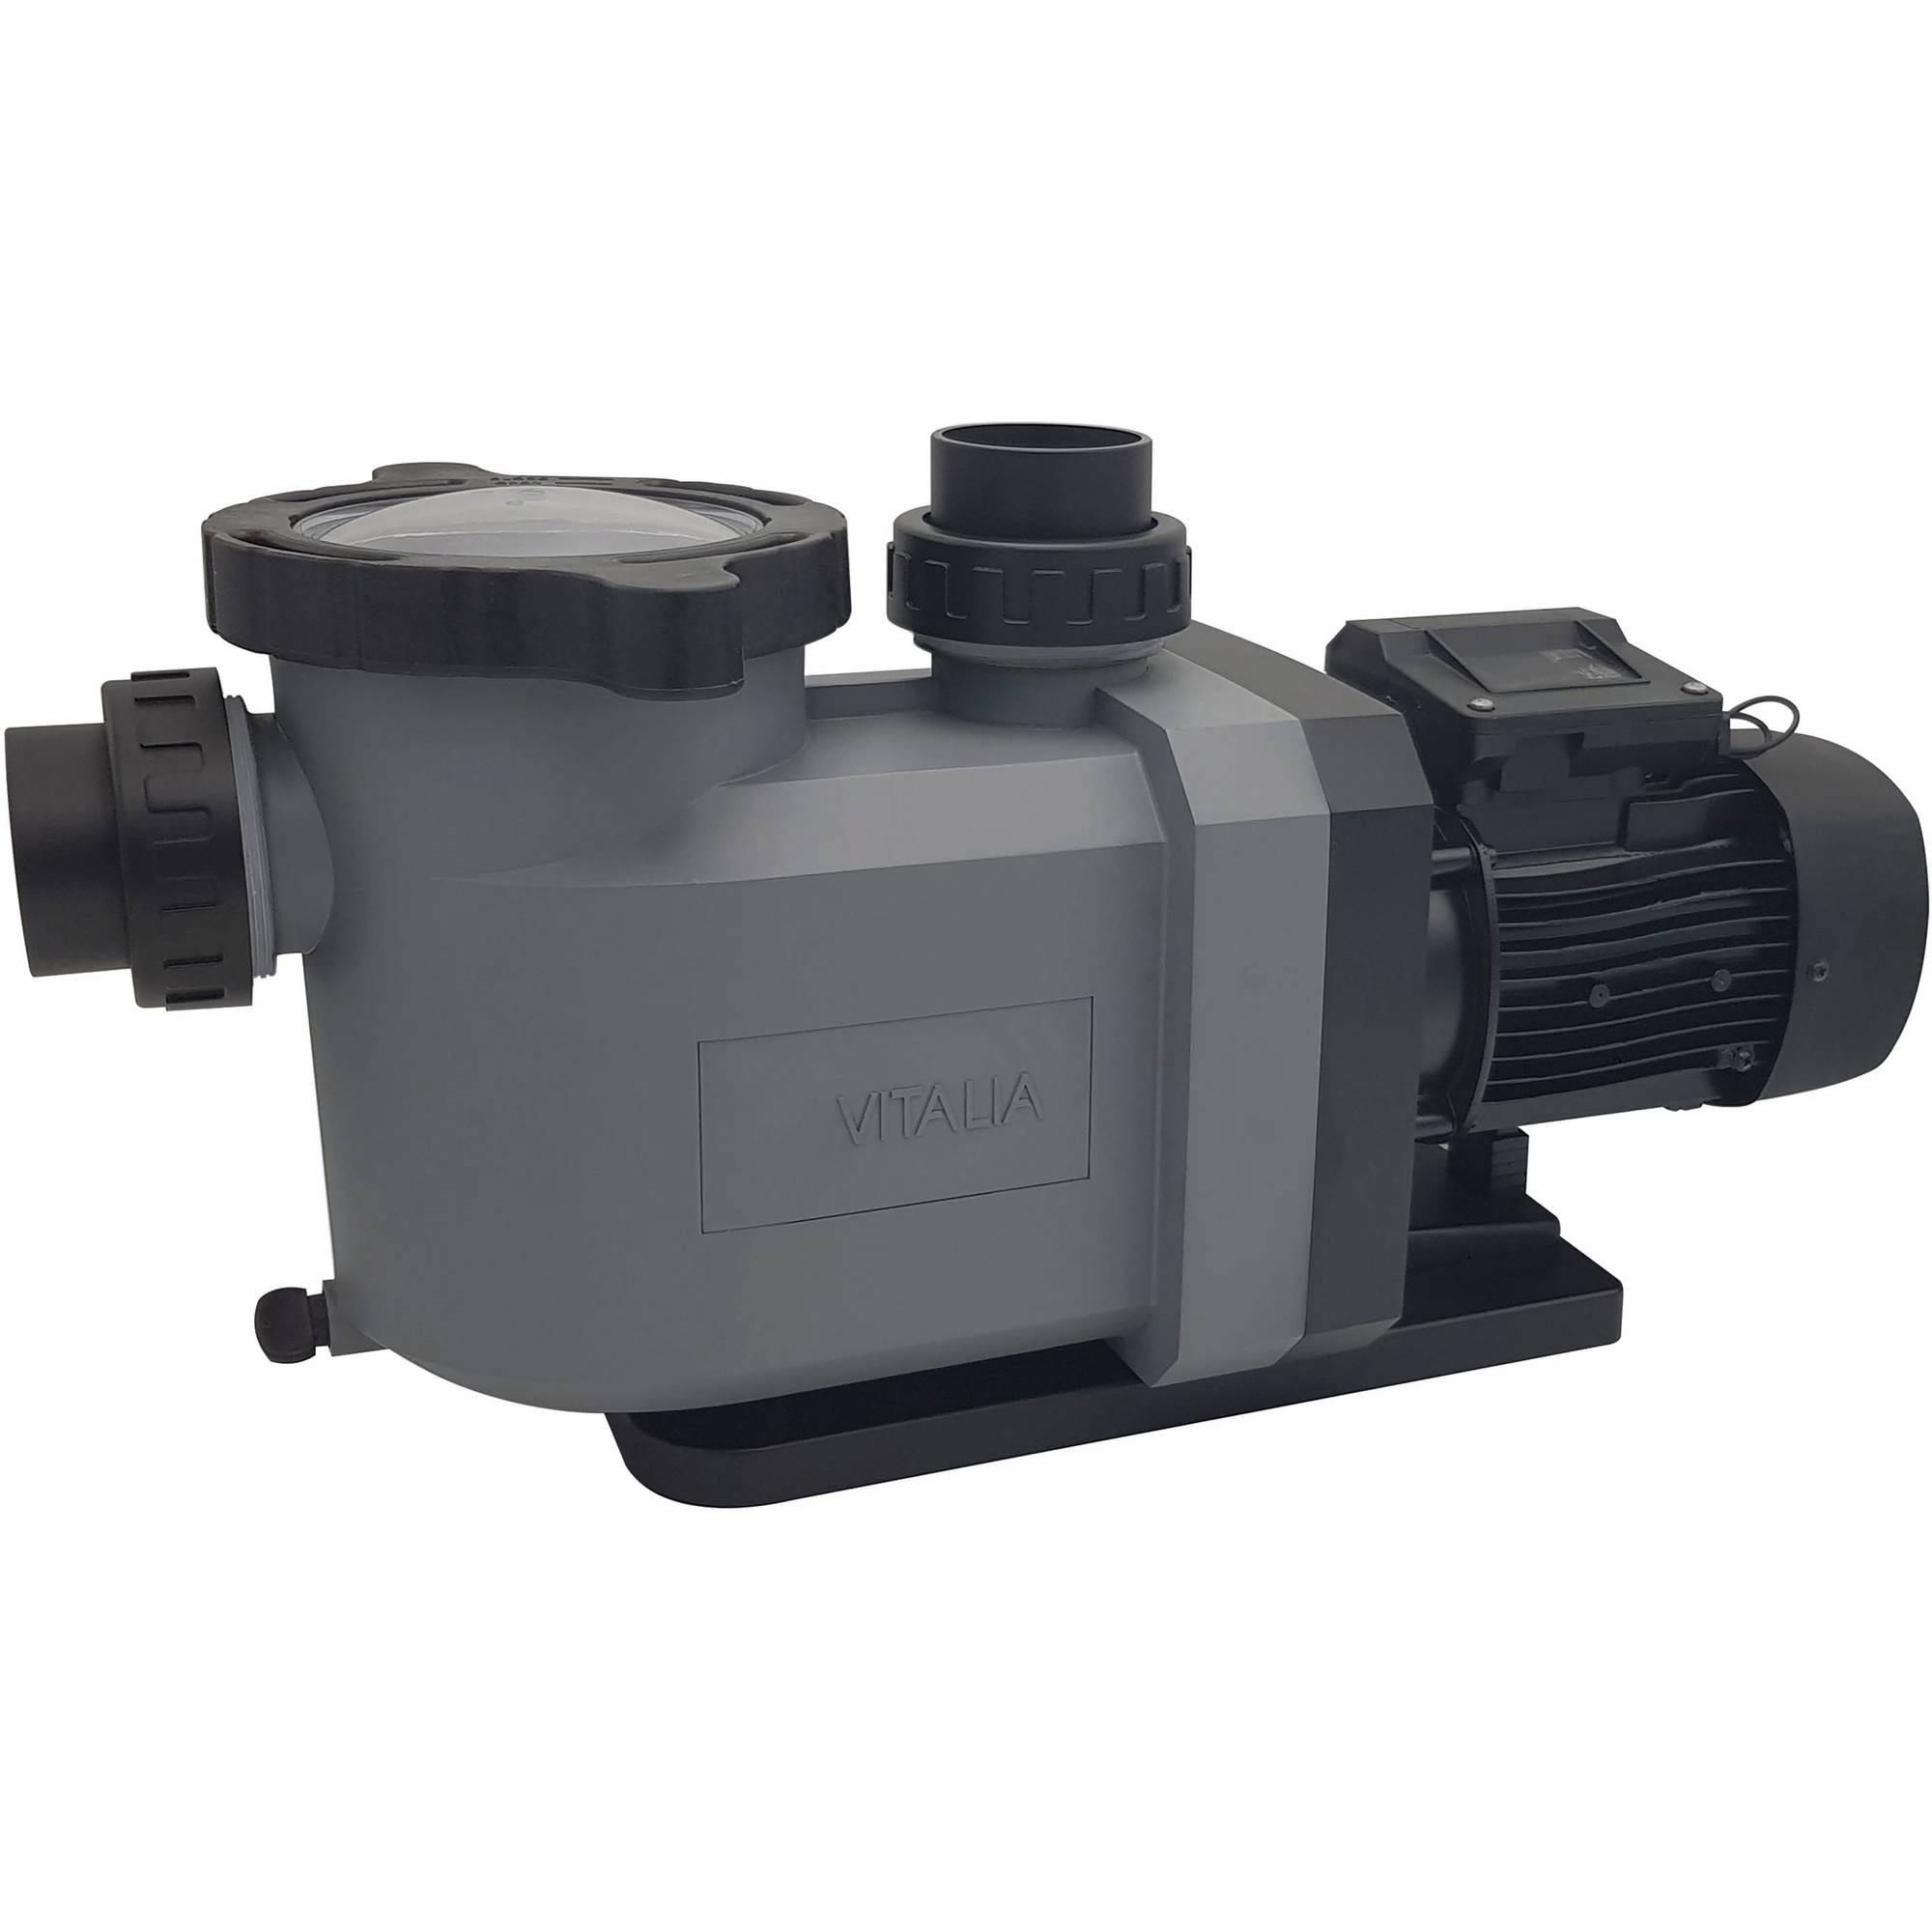 Filterpumpe Vitalia COMFORT 9W 50mm Anschluss, 8,5m³/h, 230V